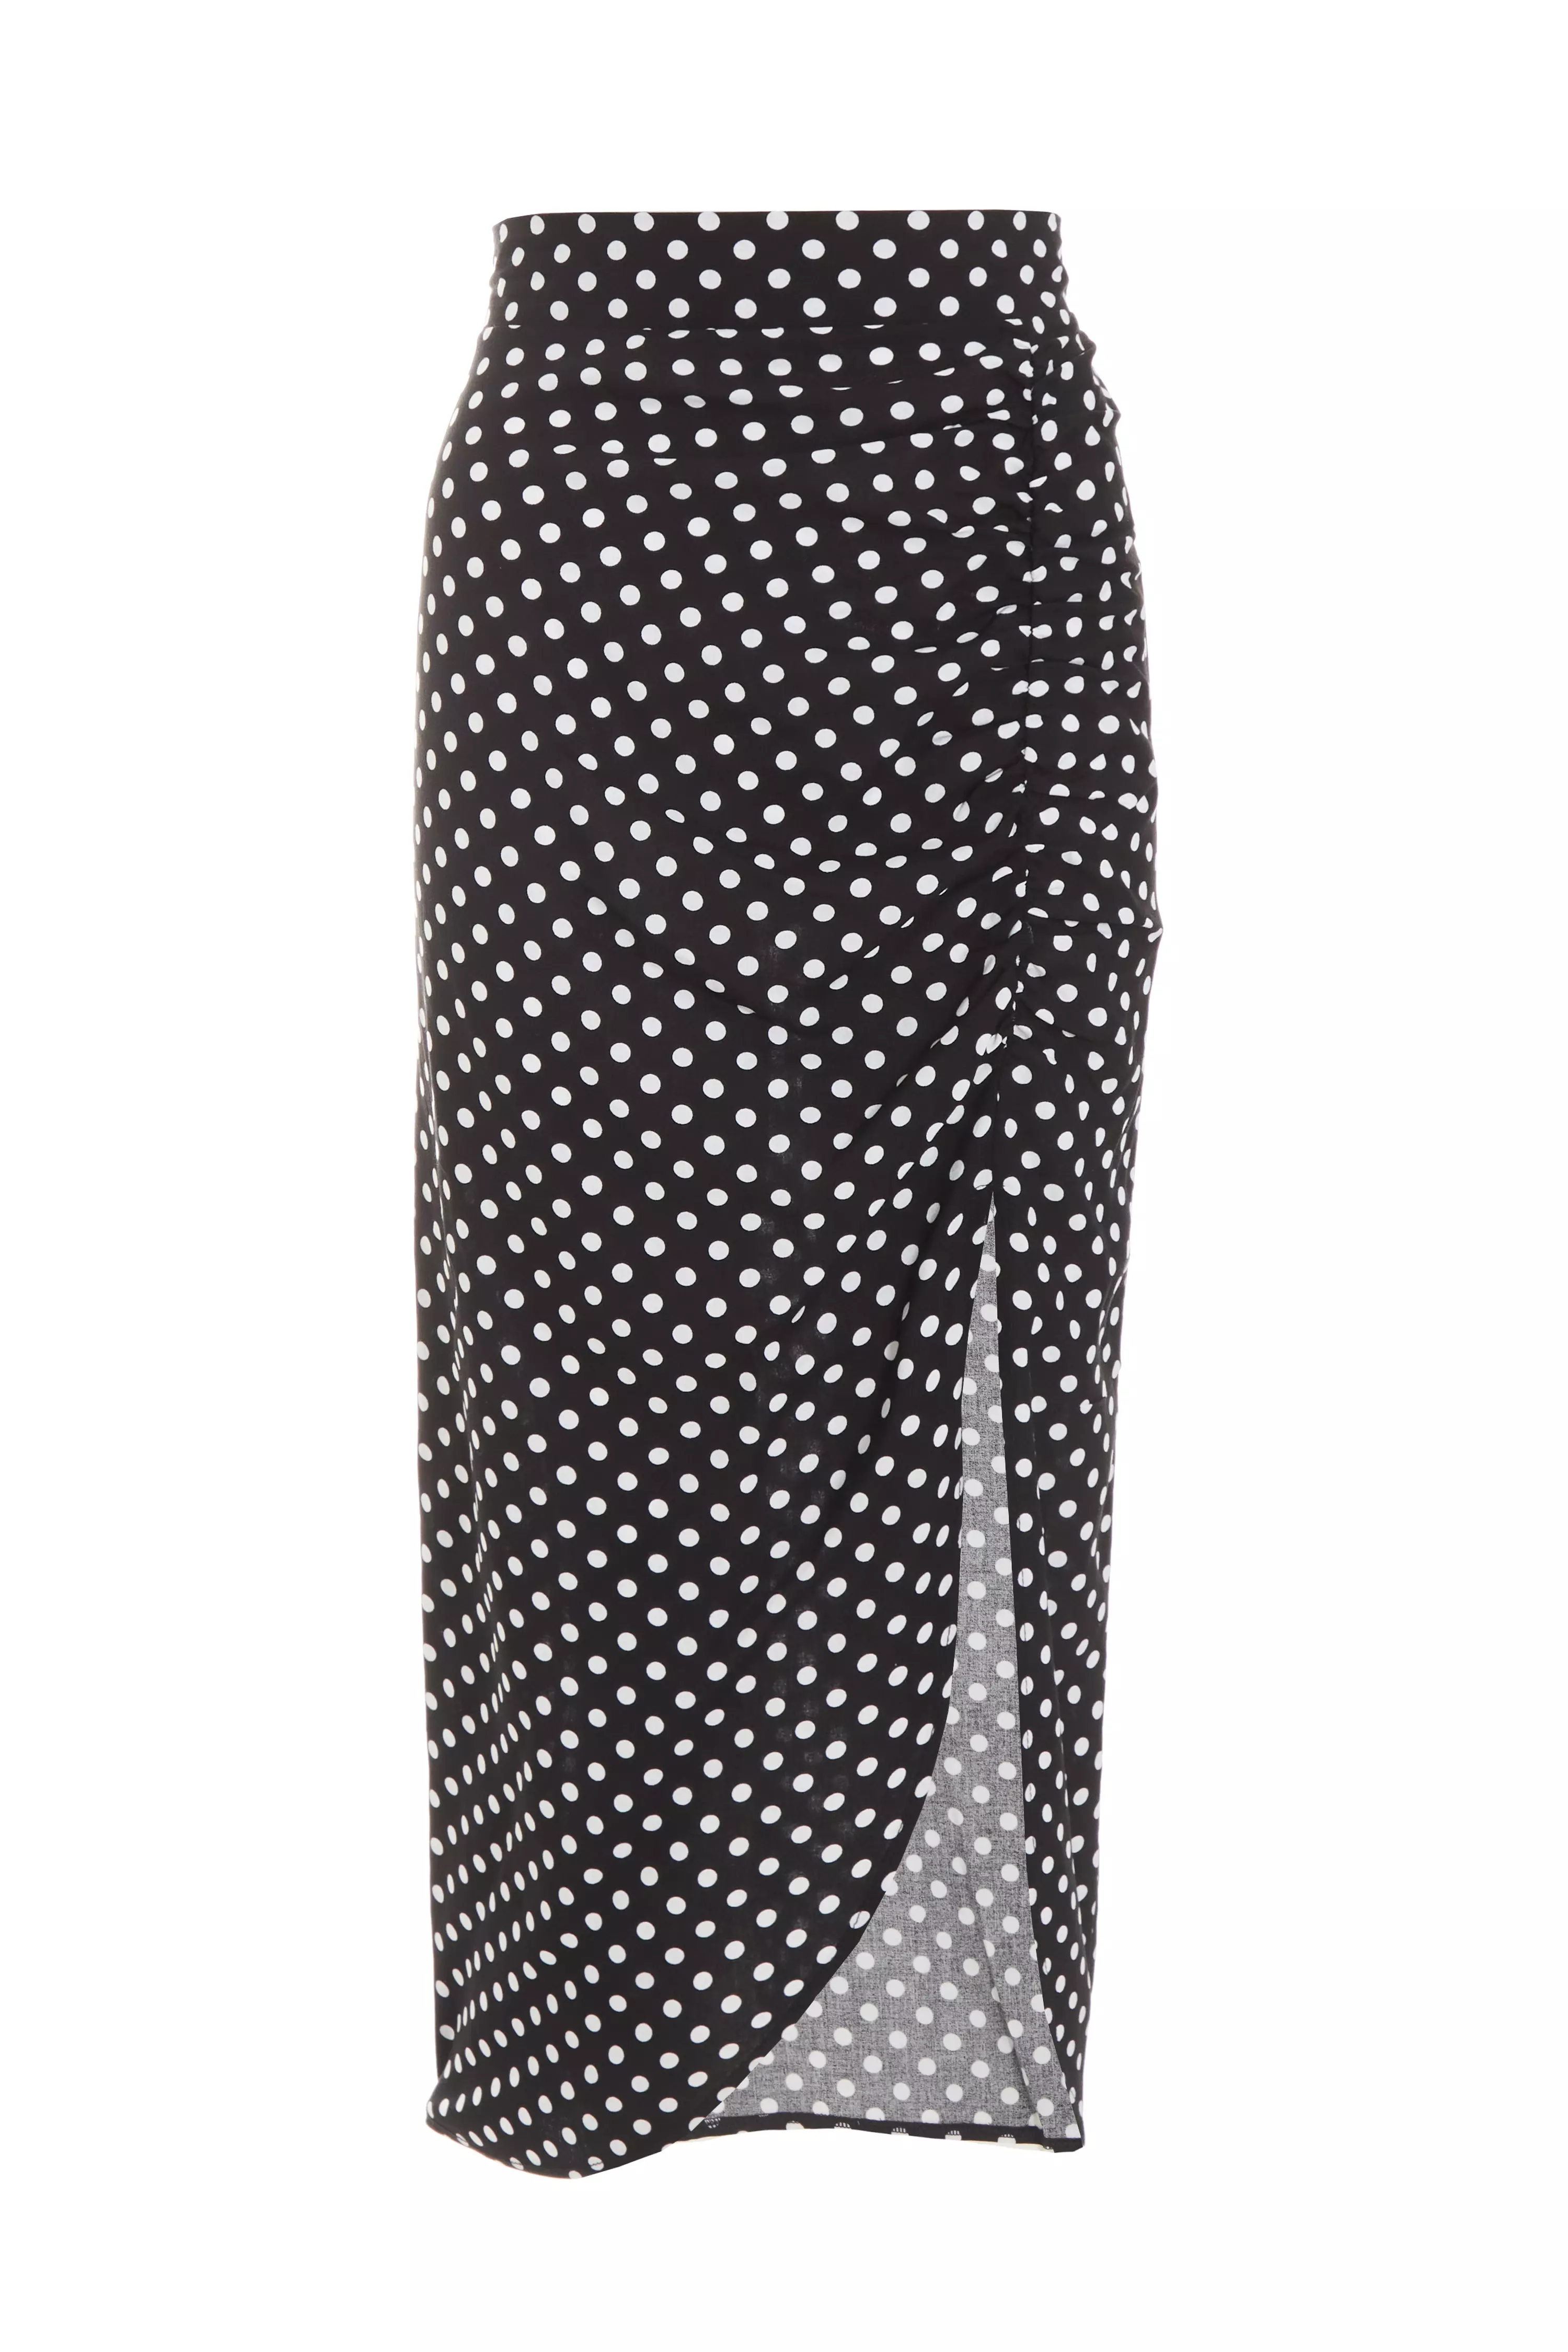 Black Polka Dot Ruched Midi Skirt - QUIZ Clothing